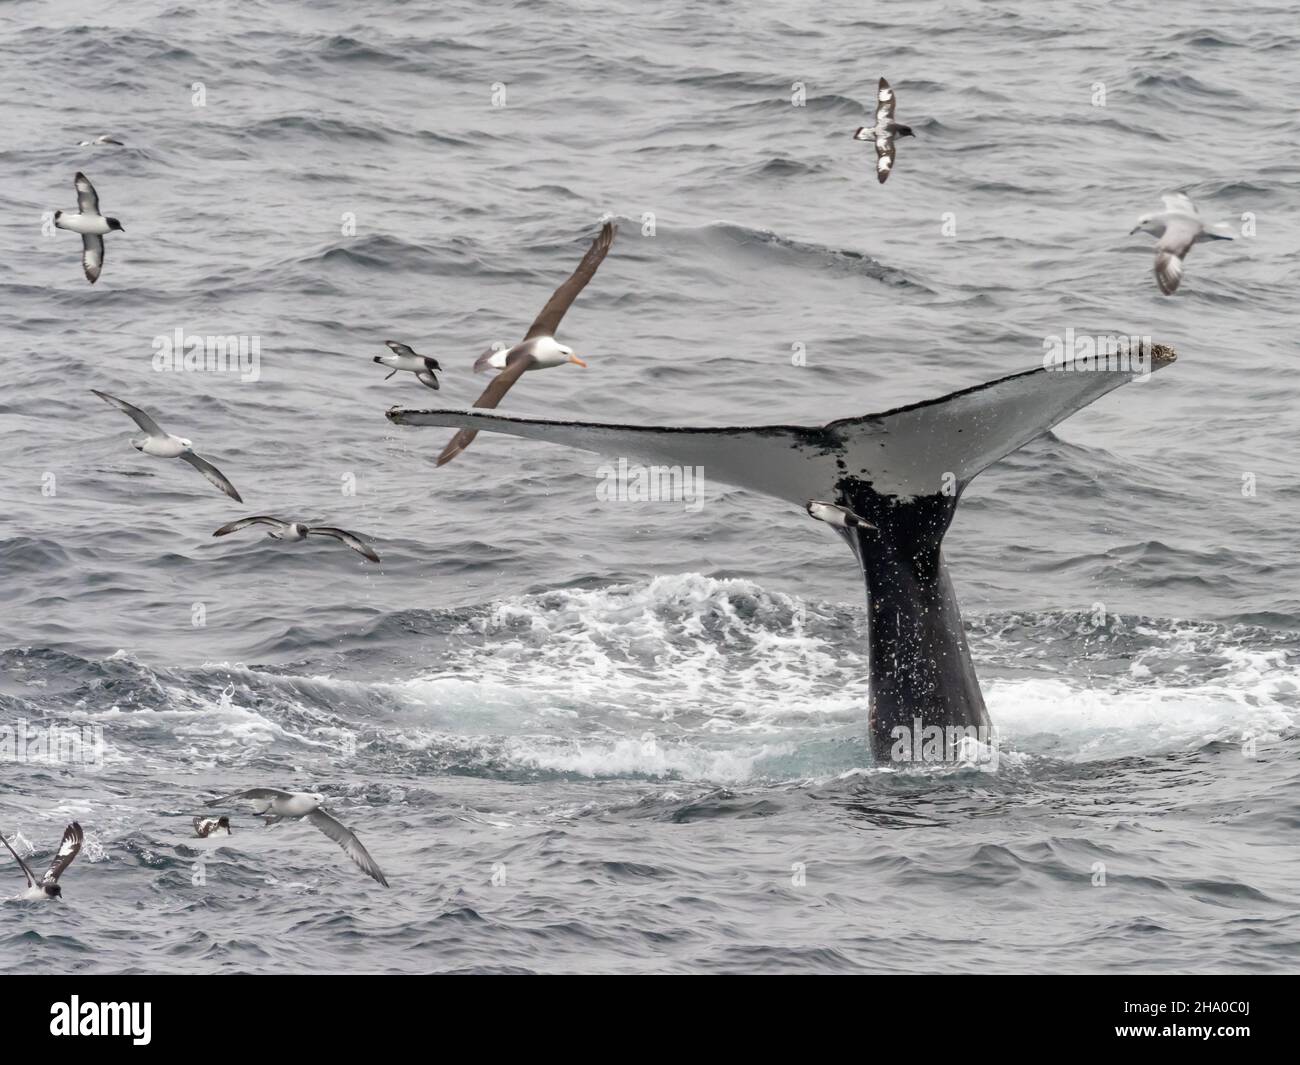 A feeding frenzy of Humpback whales, Megaptera novaeangliae feeding on krill off South Orkney Island, Antarctica Stock Photo